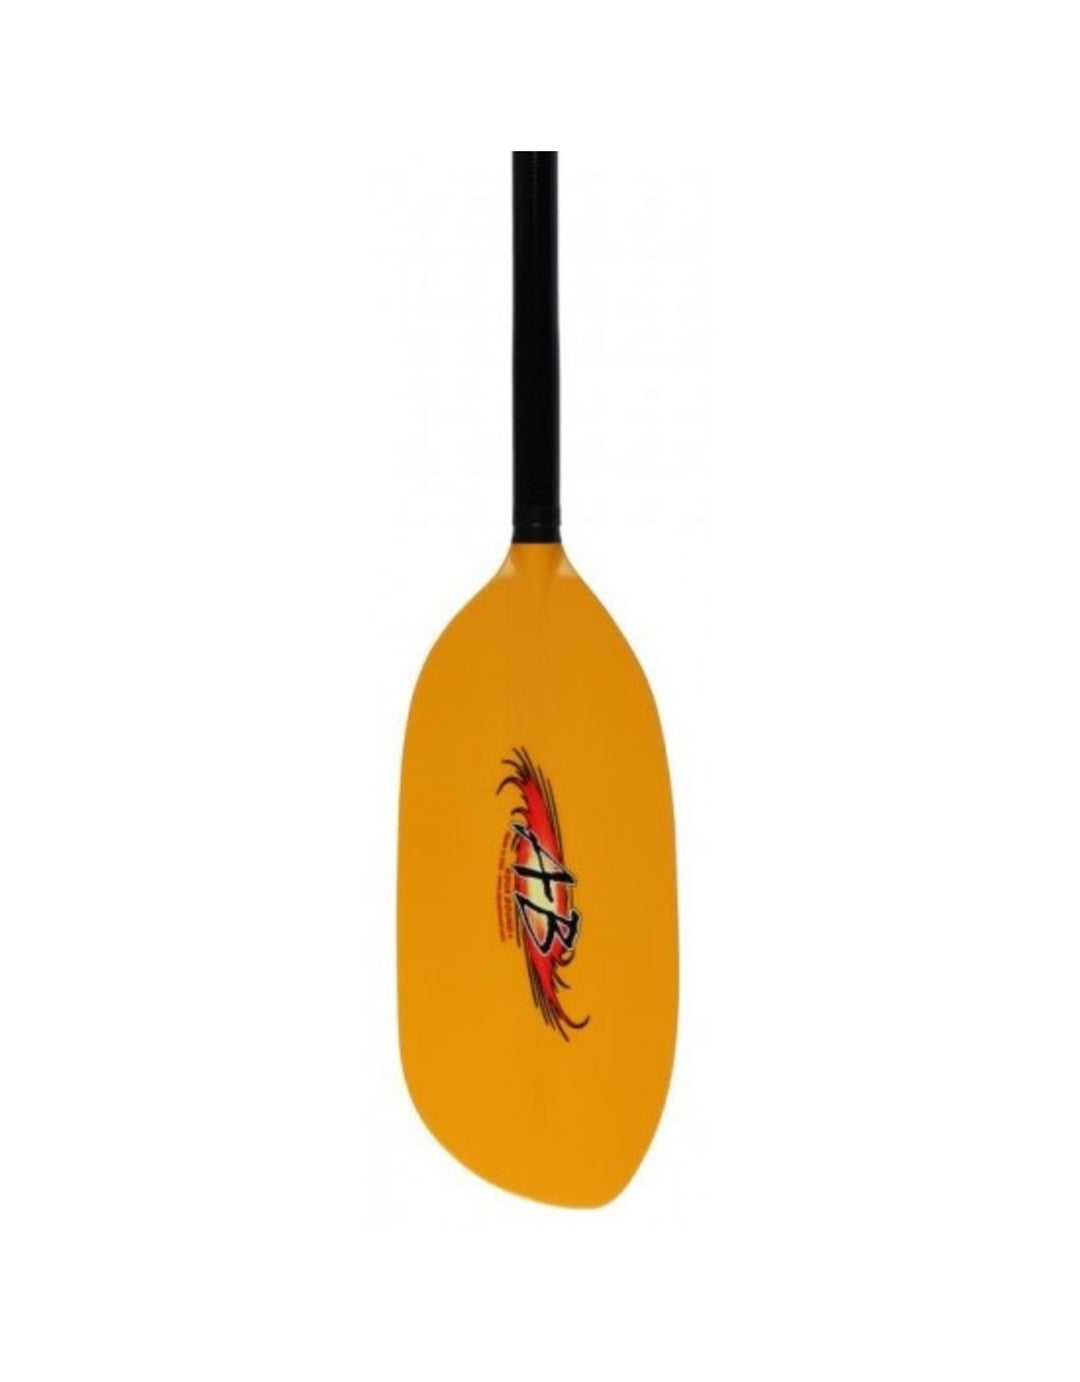 Aqua Bound Shred Fiberglass 4-Piece Kayak Paddle